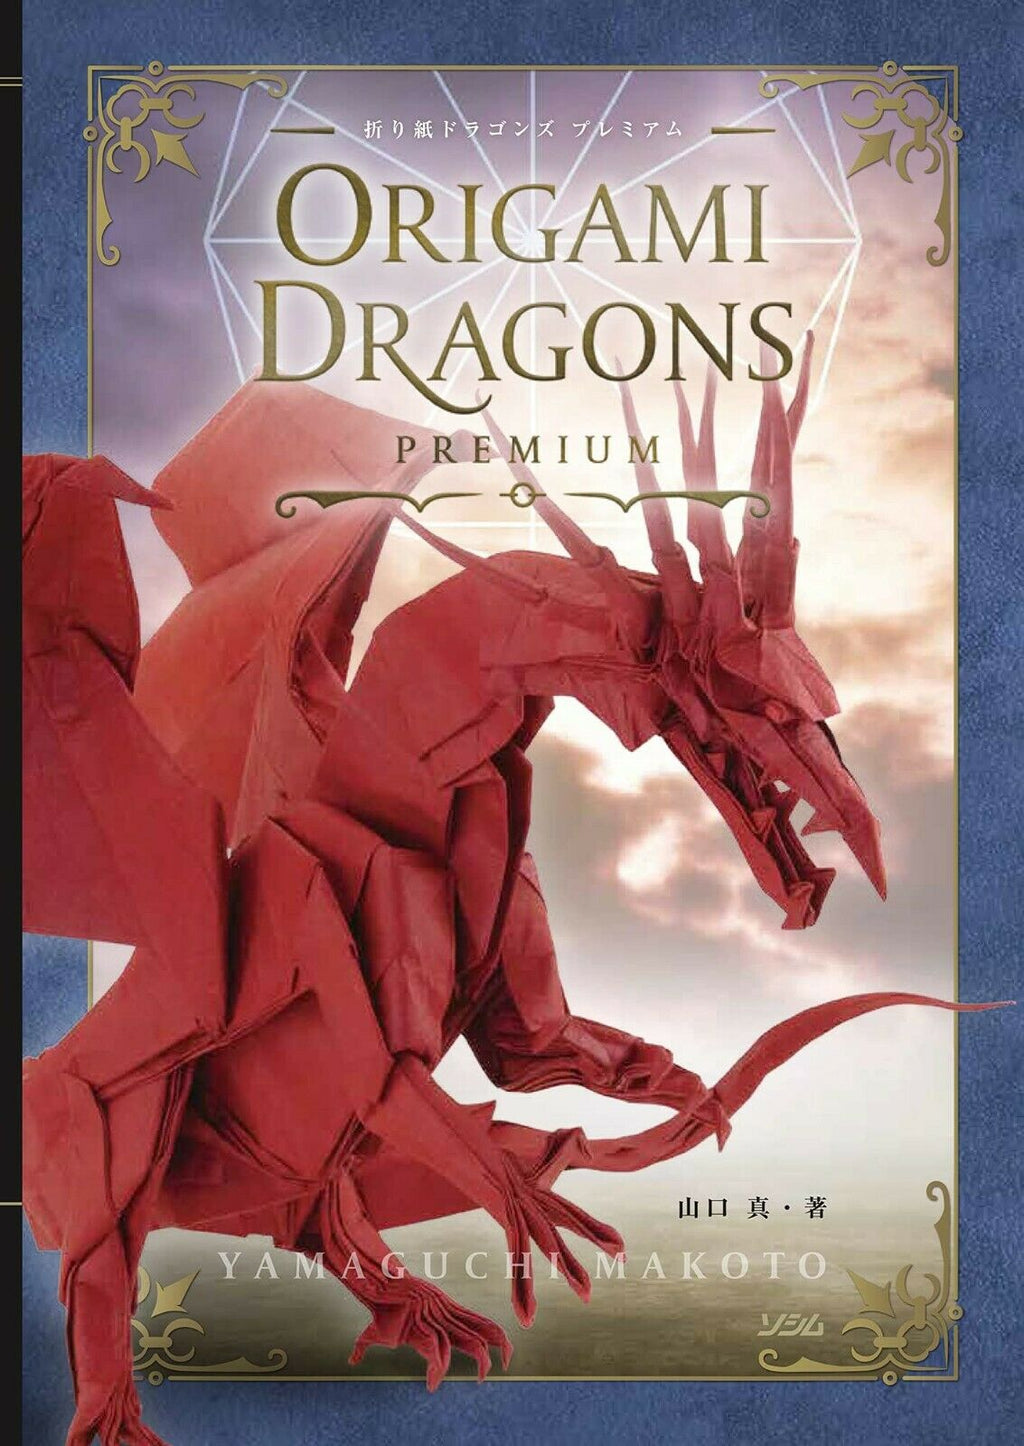 NEW' ORIGAMI DRAGONS PREMIUM Makoto Yamaguchi | JAPAN Book Folding Diagram